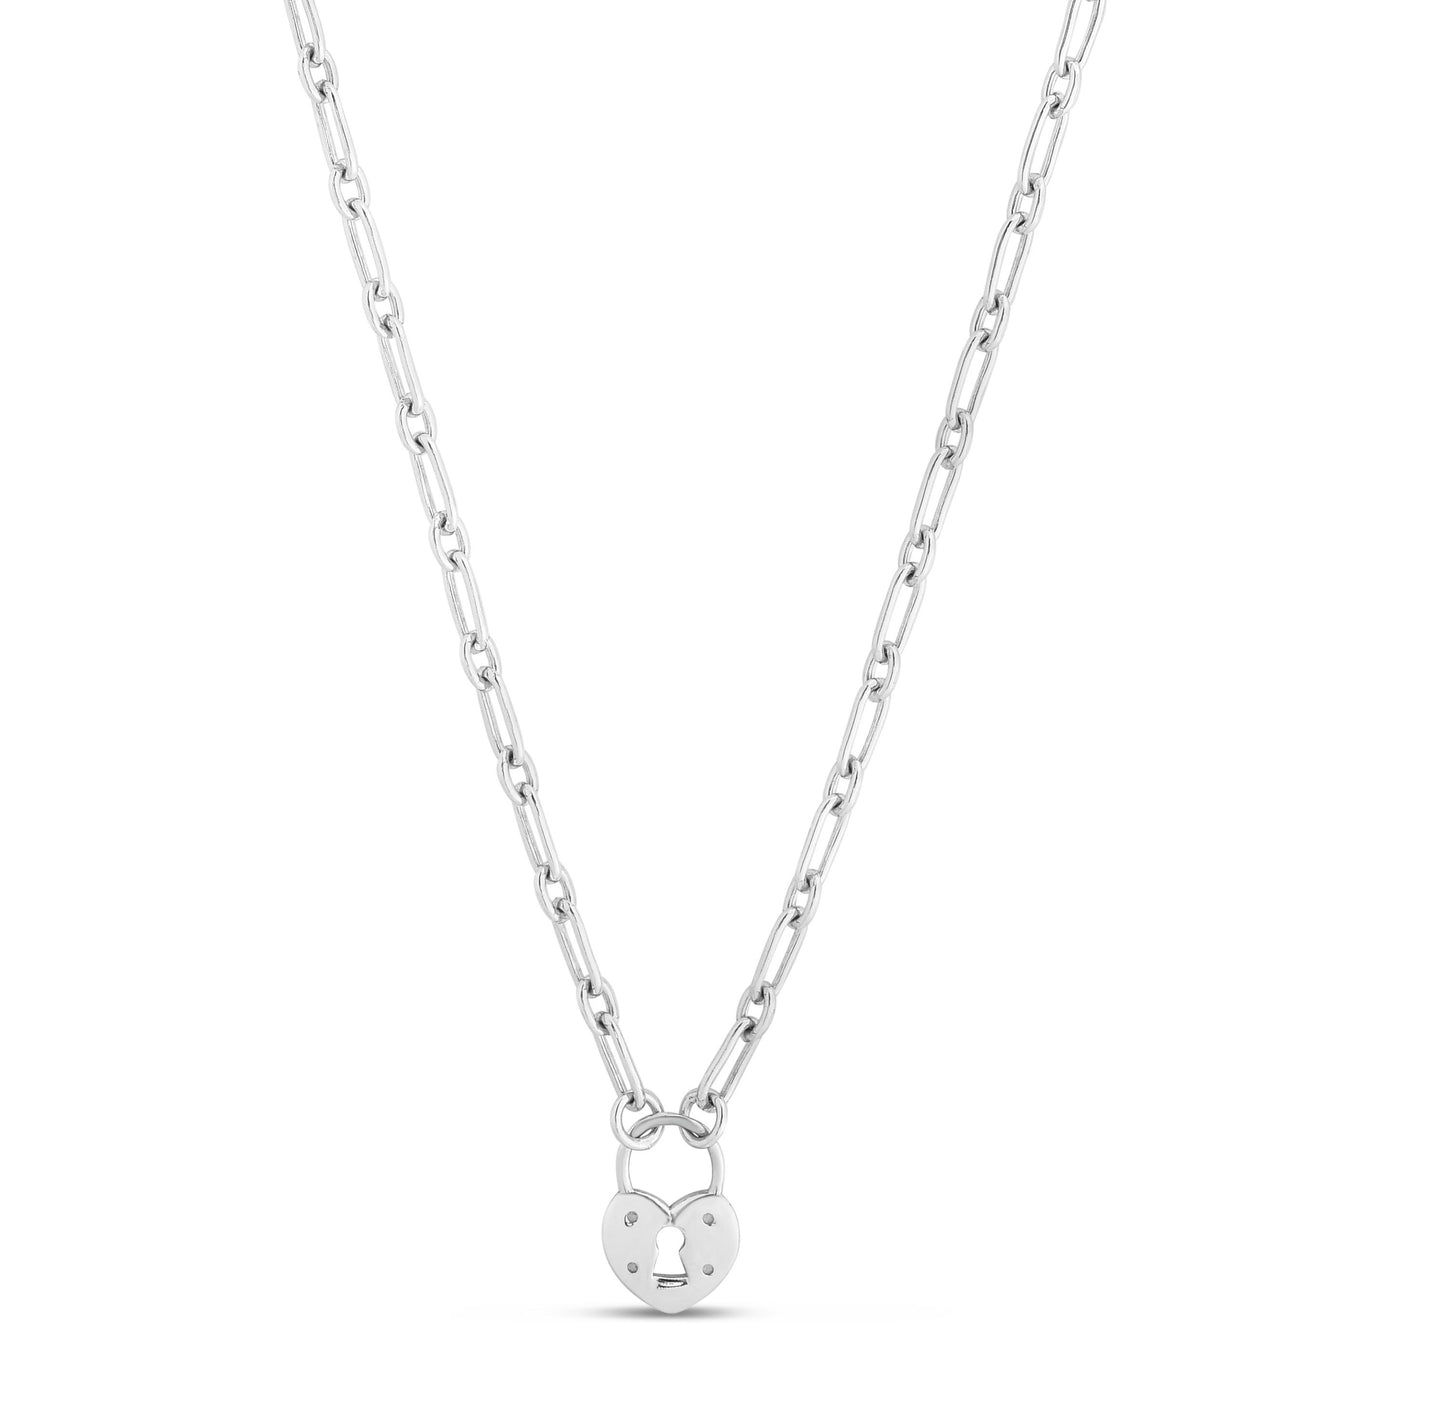 Silver heart paper clip chain necklace